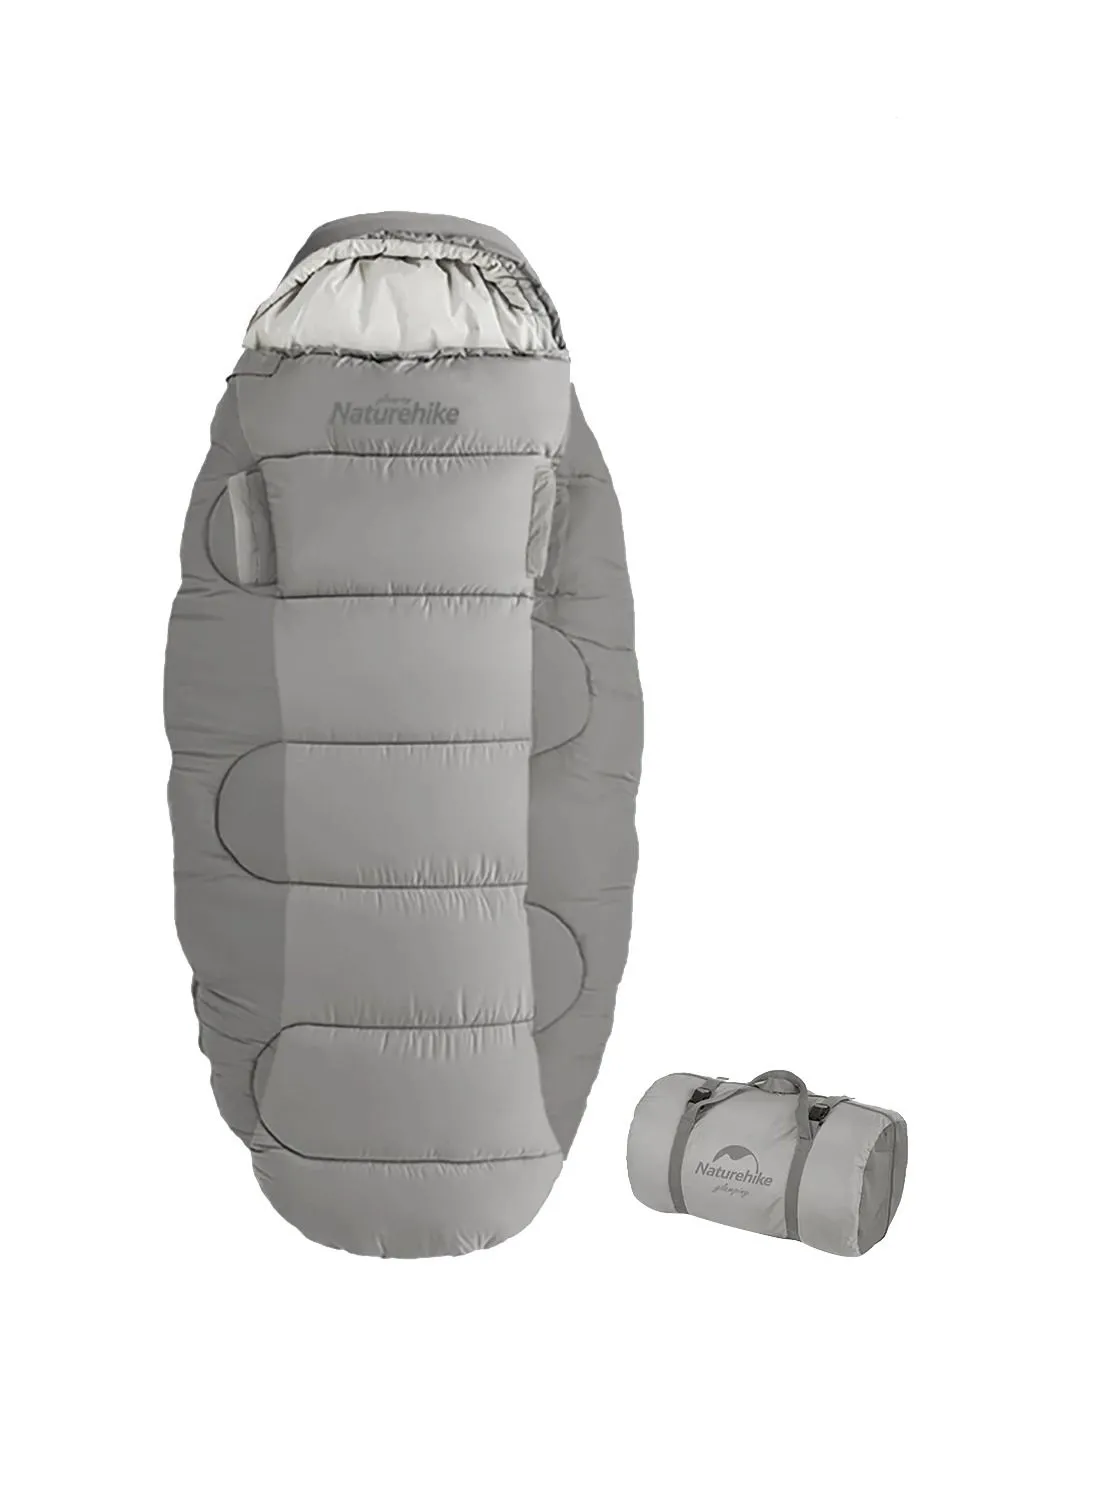 Naturehike Oval Sleeping Bag PS300 Grey